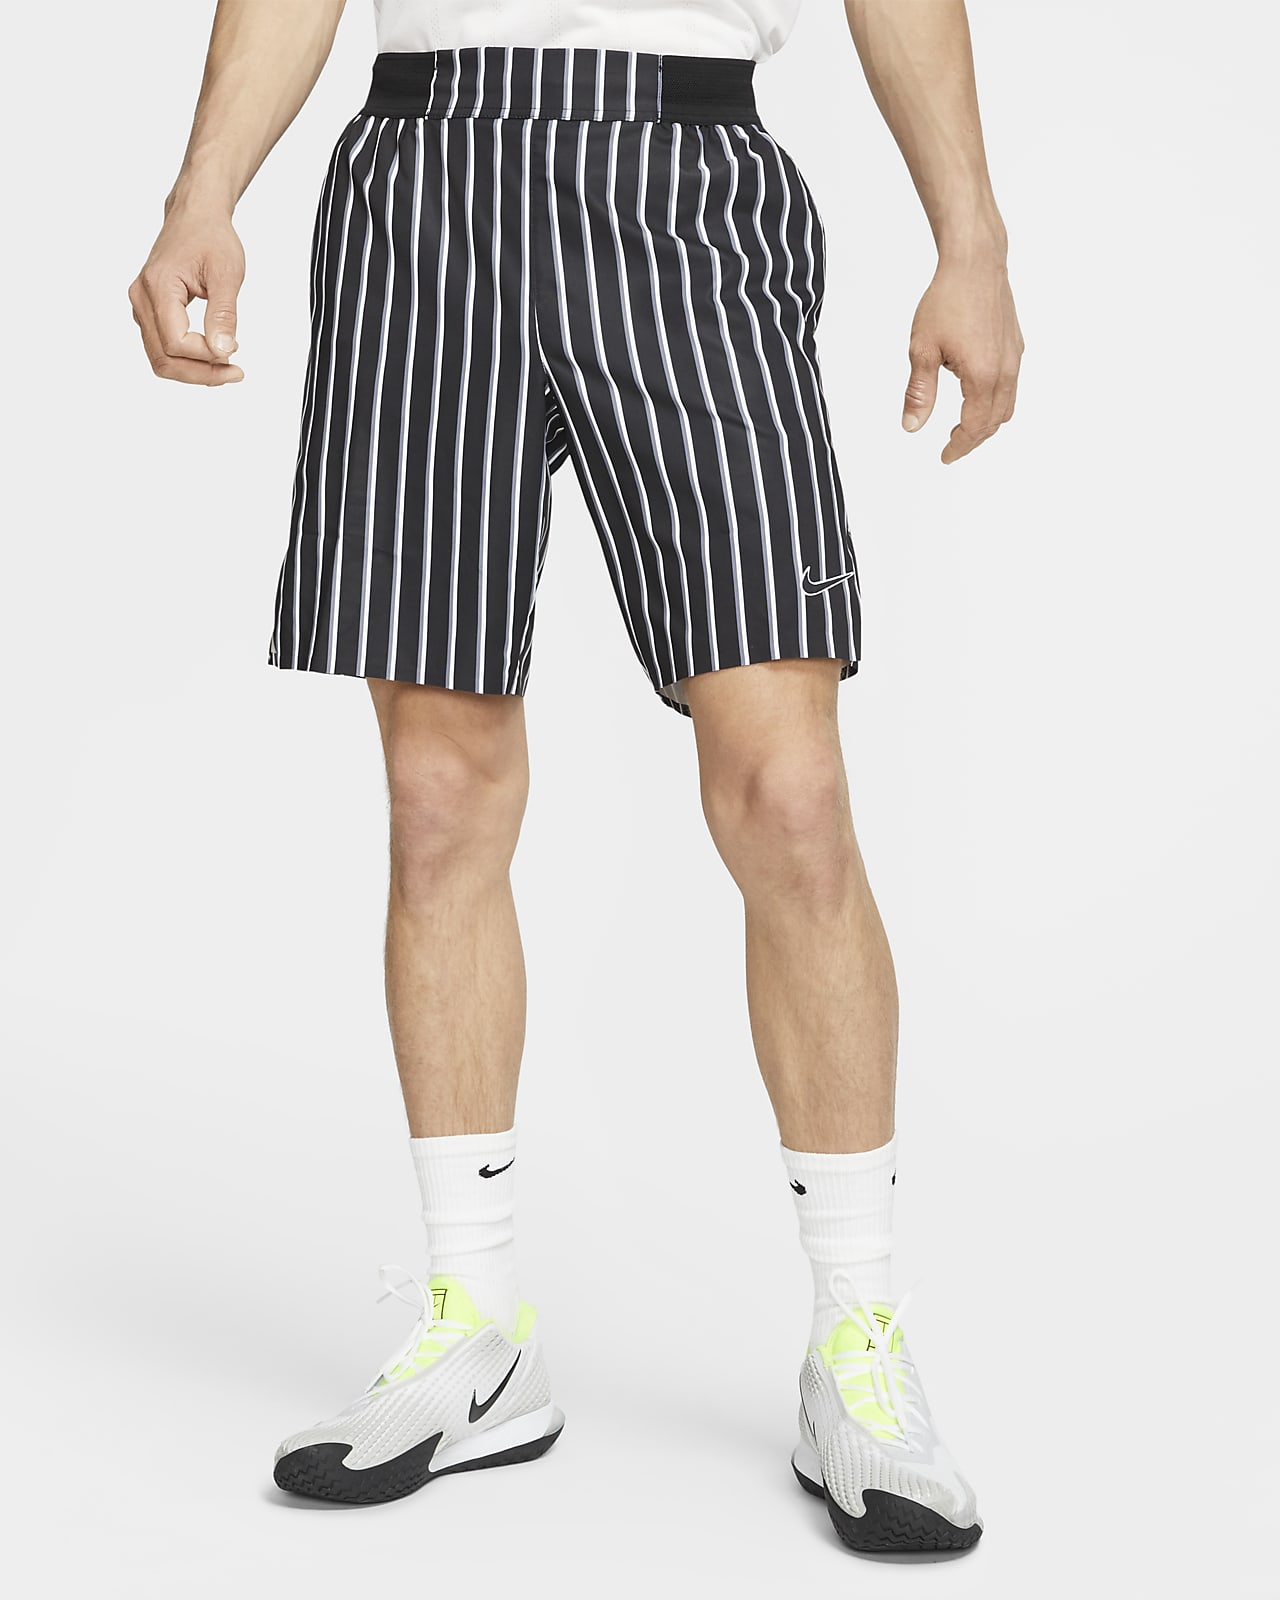 NikeCourt Slam Men's Tennis Shorts 